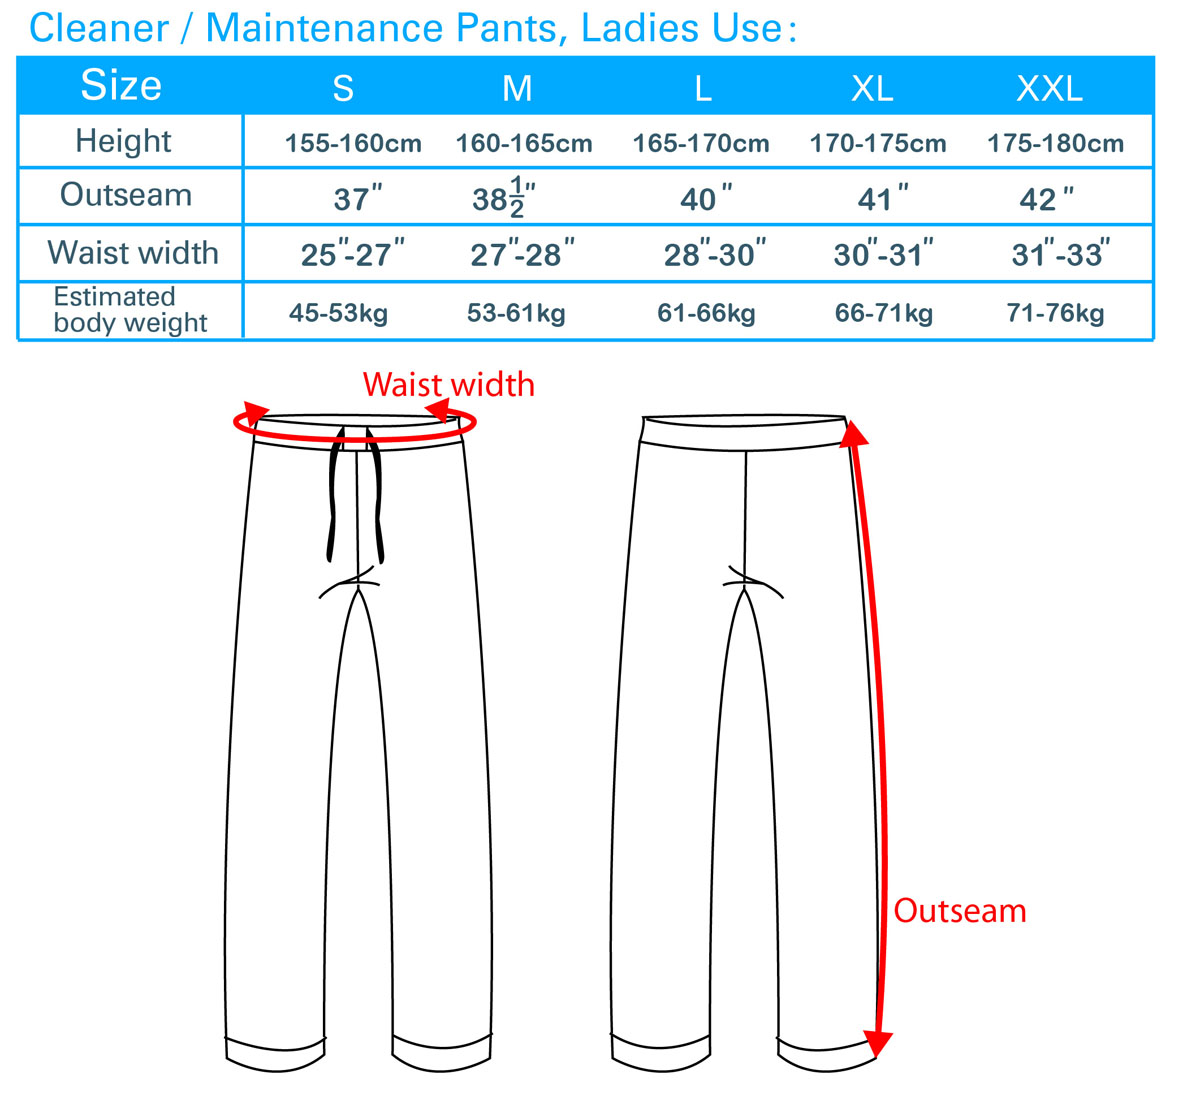 Cleaner/Maintenance ,Pants Ladies Use